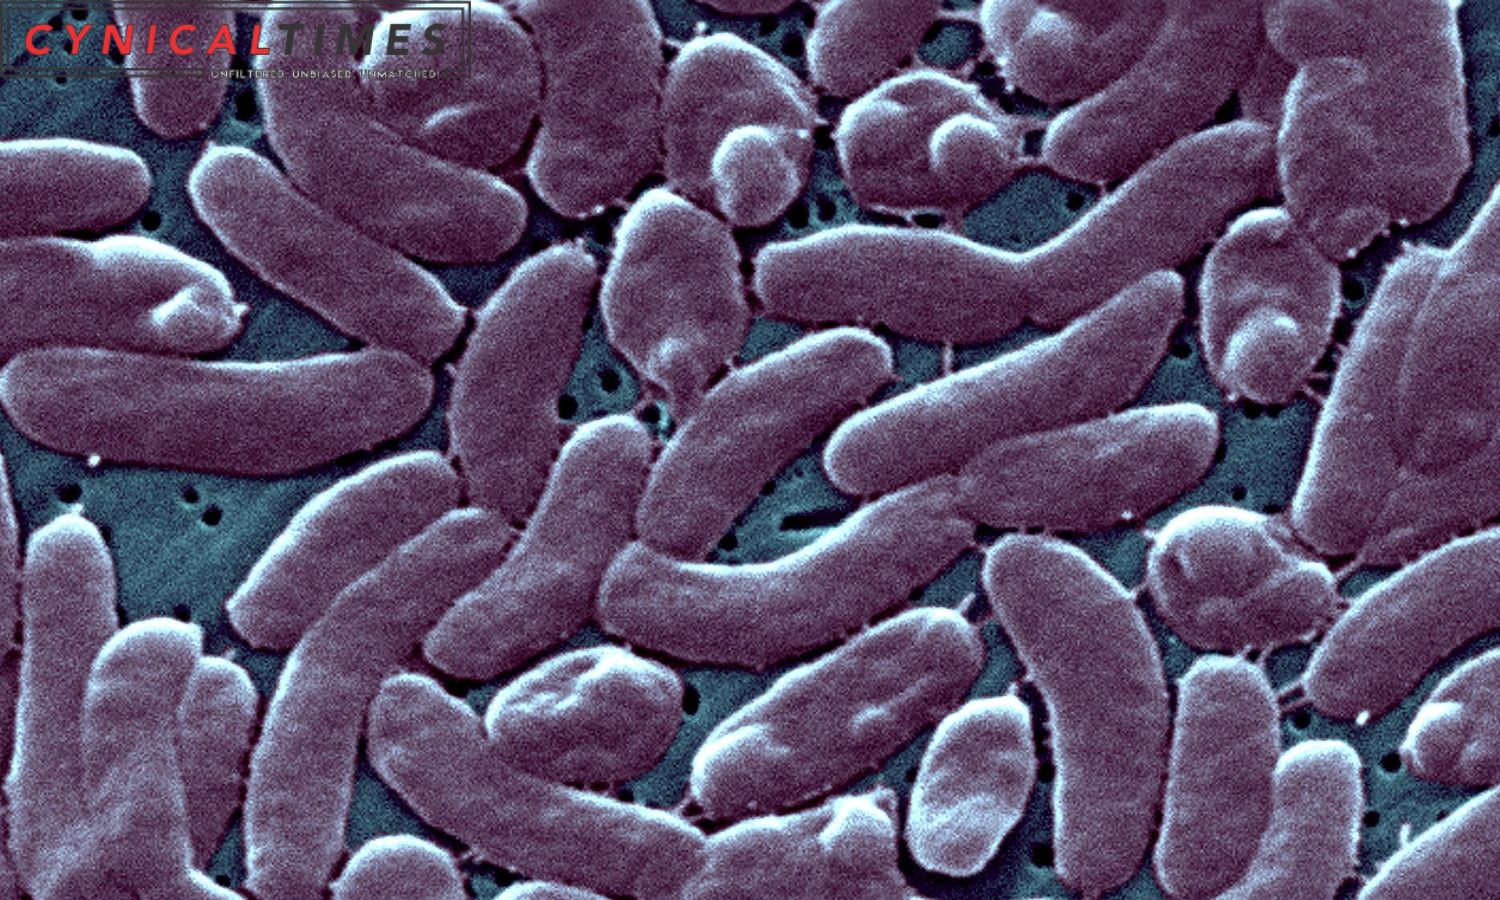 Flesh Eating Bacteria Alert